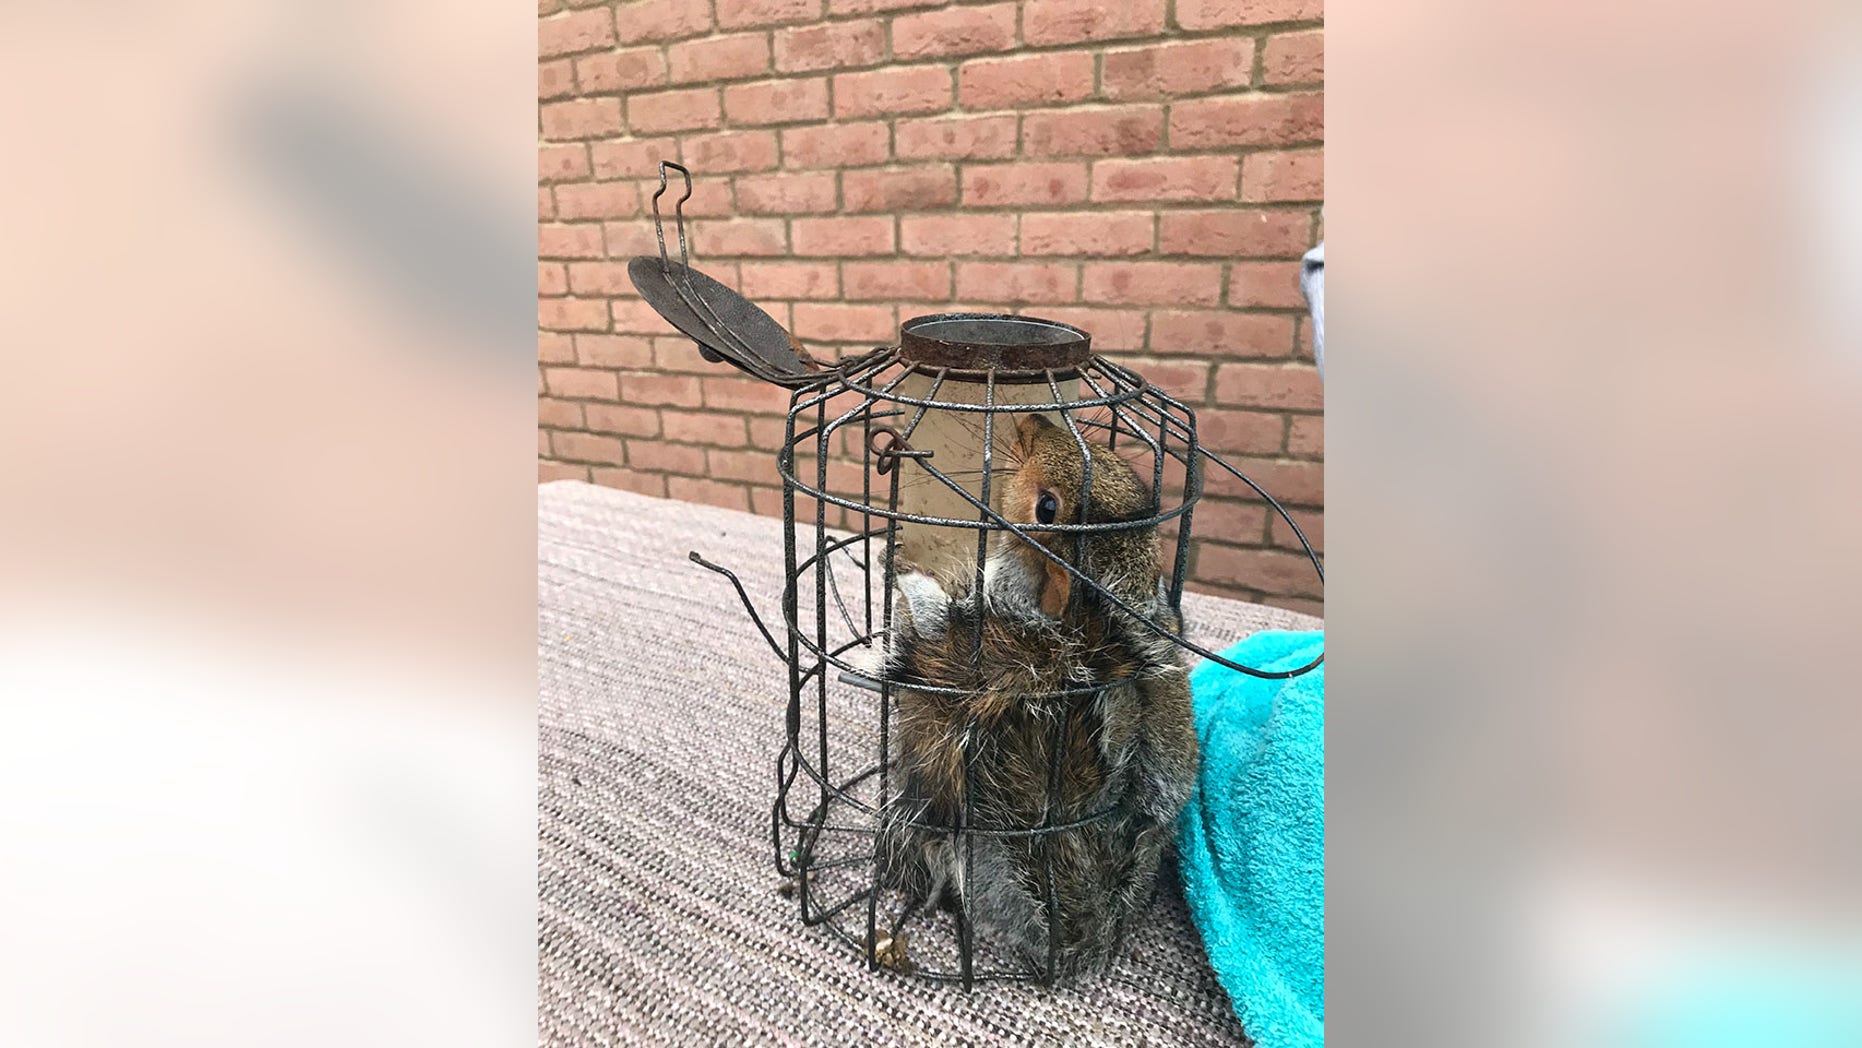 Woman finds squirrel wedged inside squirrel-proof bird feeder